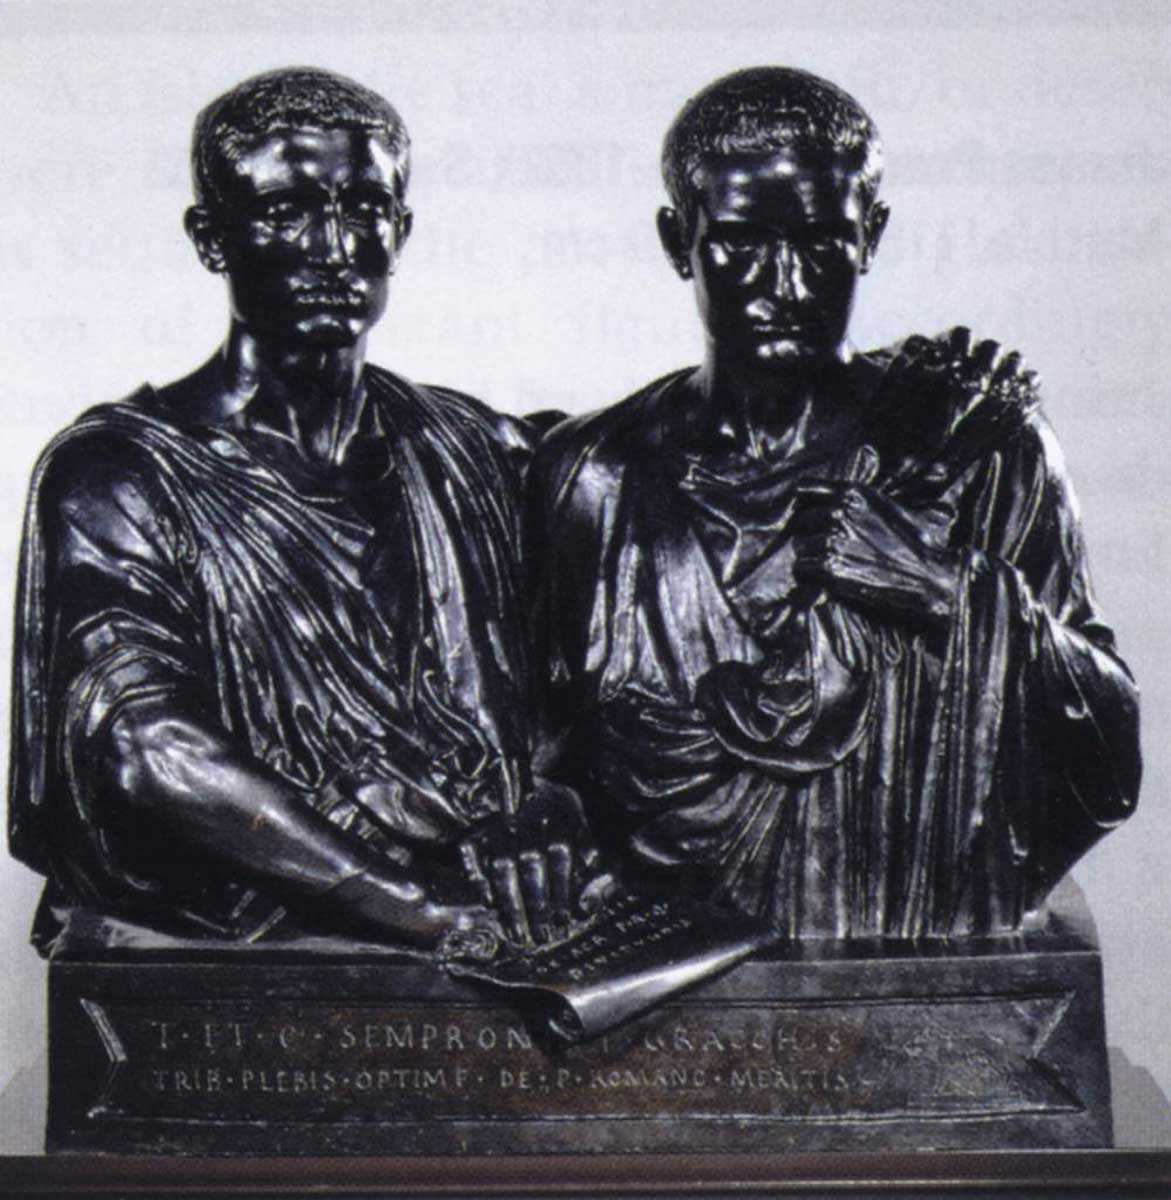 gracchi brothers statue